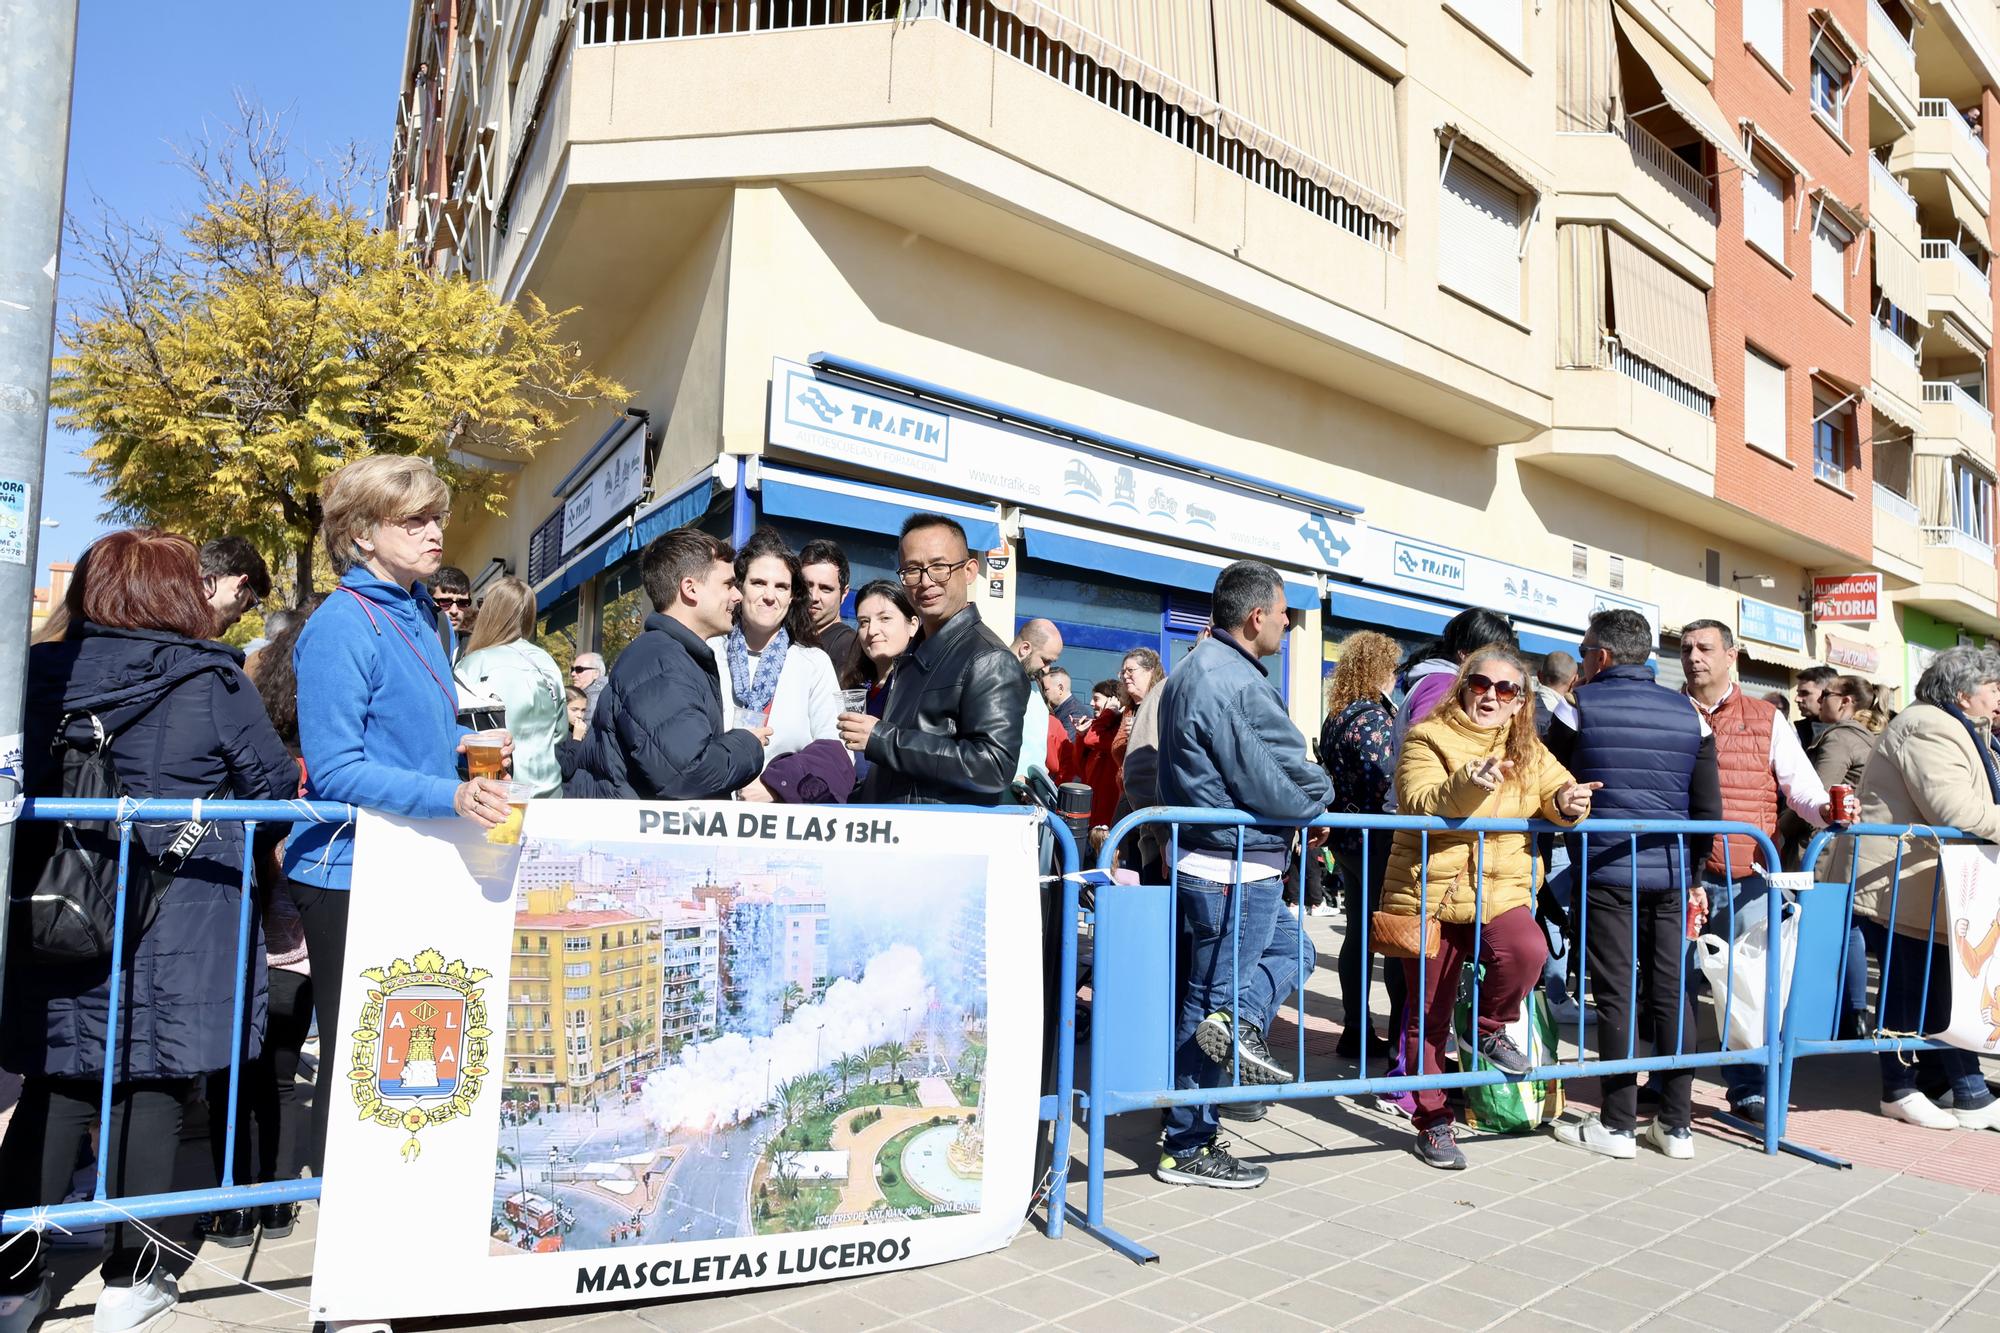 La mascletà en Tómbola sacude Alicante